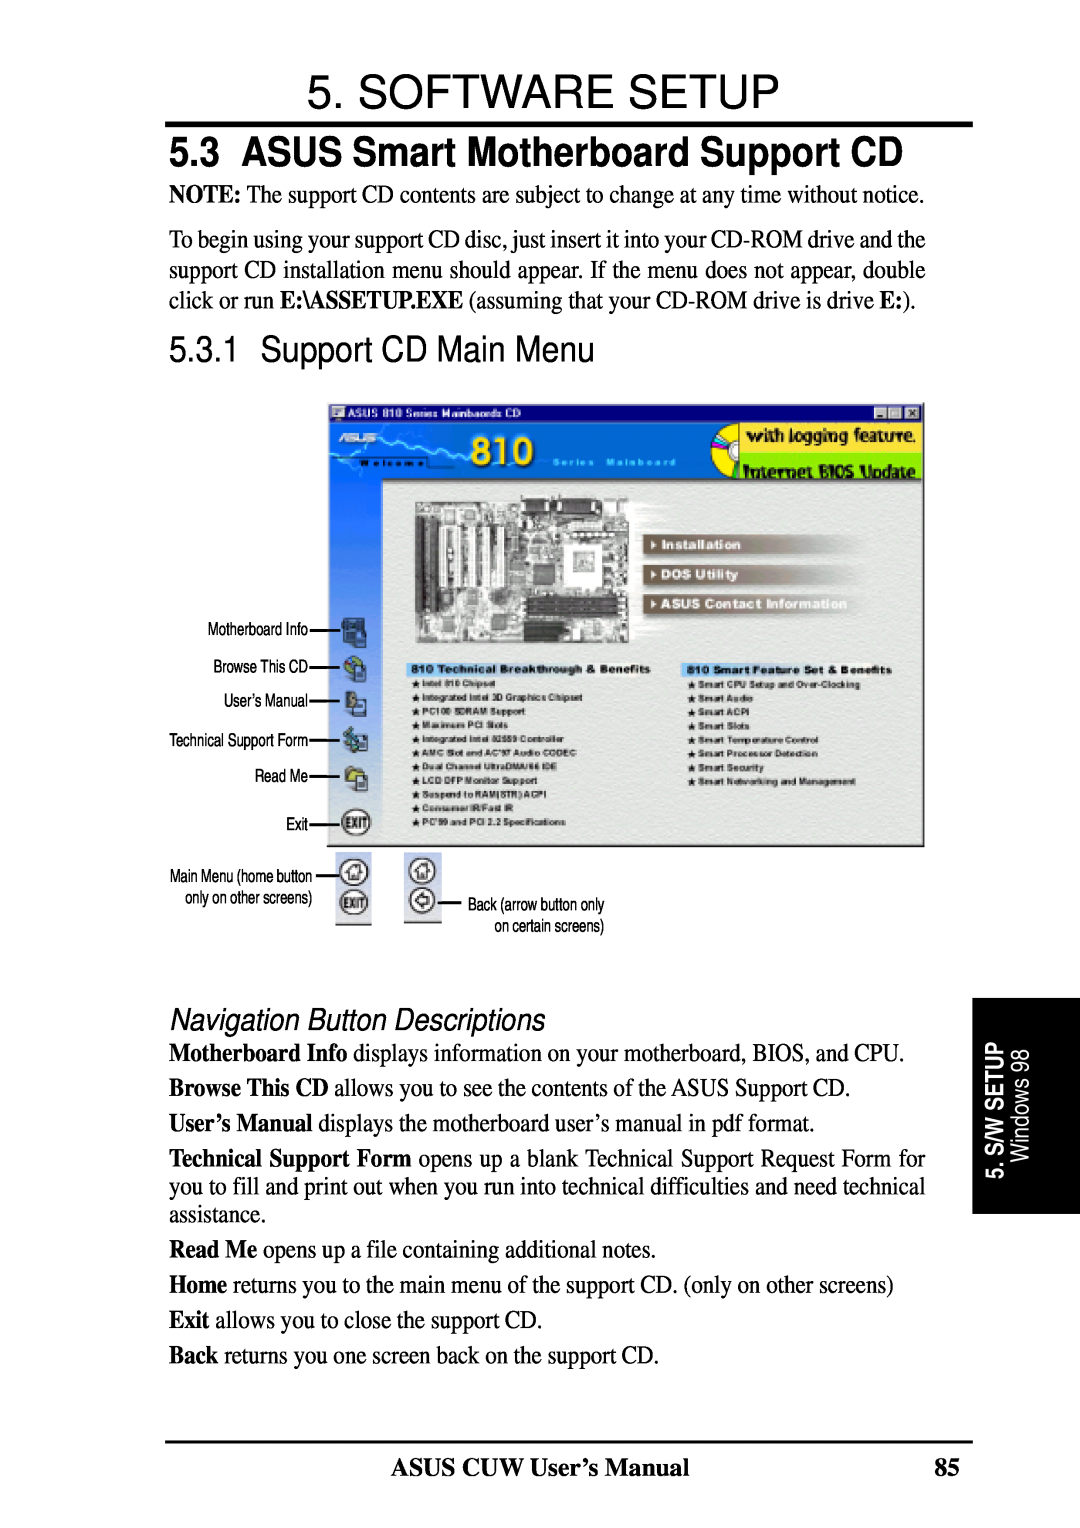 Asus 810 ASUS Smart Motherboard Support CD, Support CD Main Menu, Navigation Button Descriptions, Software Setup, Windows 